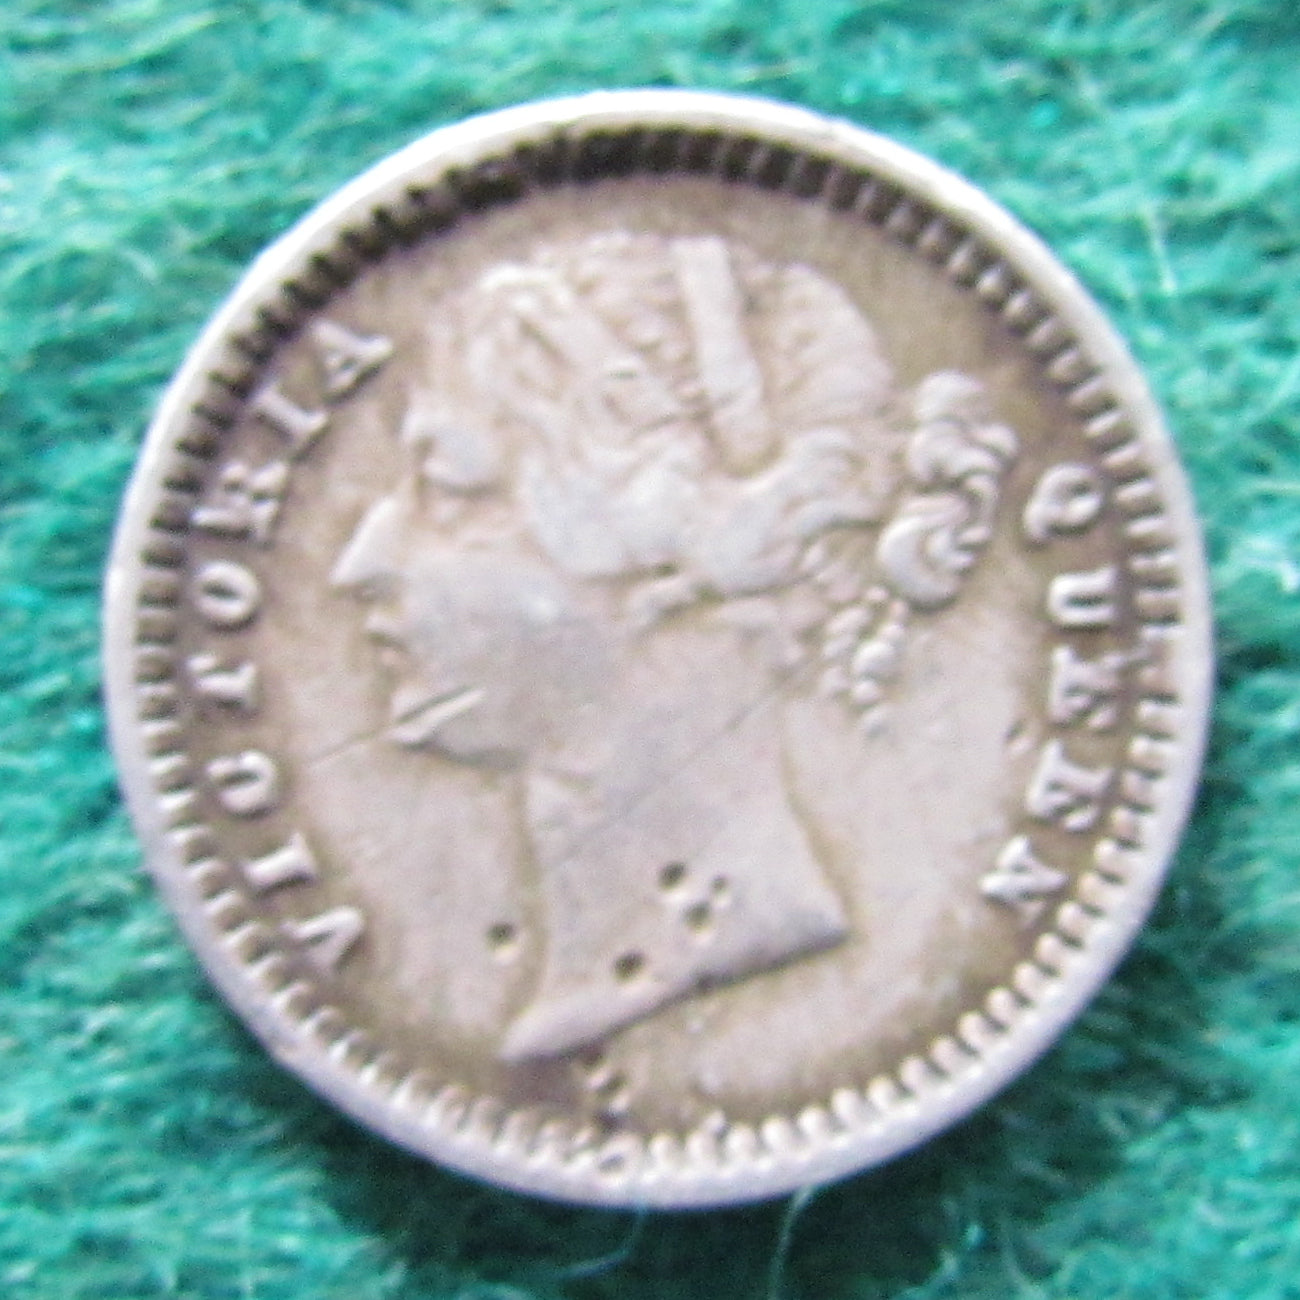 East India Company 1841 2 Annas Queen Victoria Coin